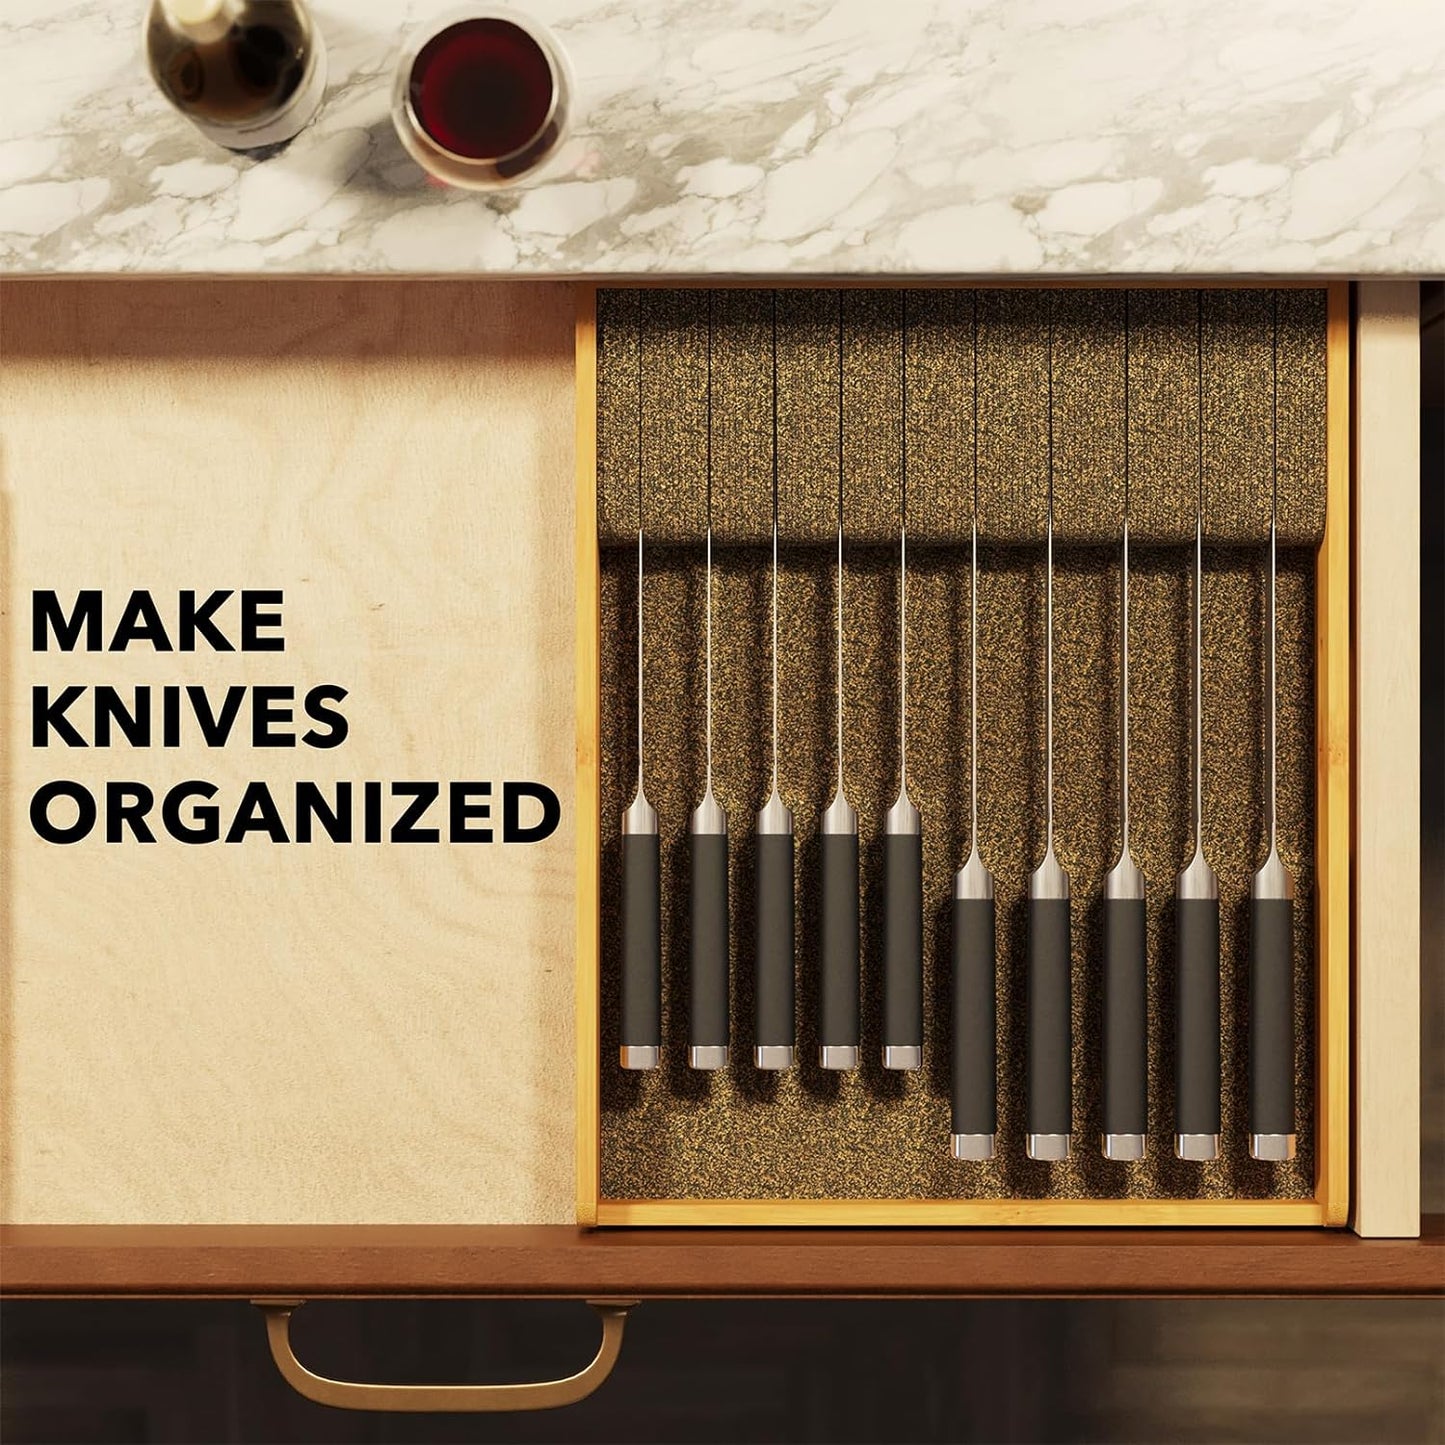 SpaceAid knife drawer organizer